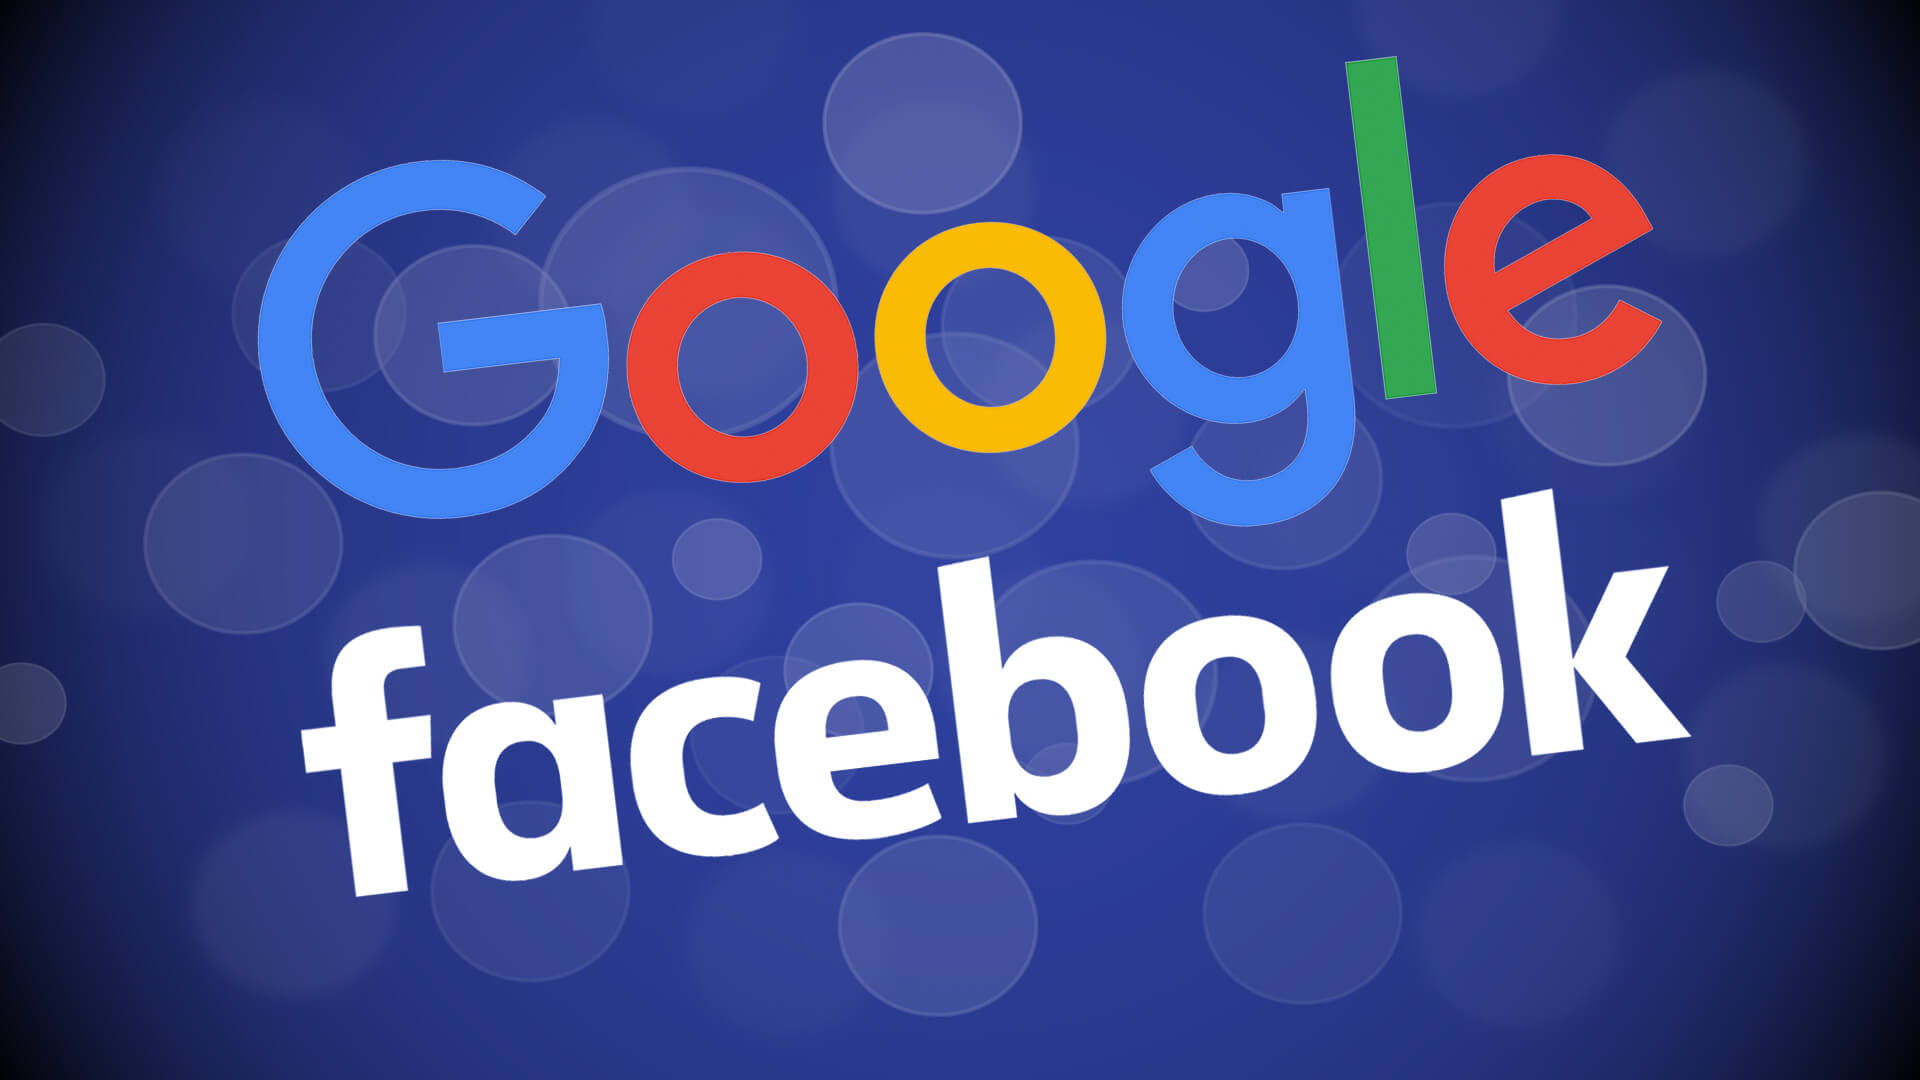 Google e Facebook notizie false